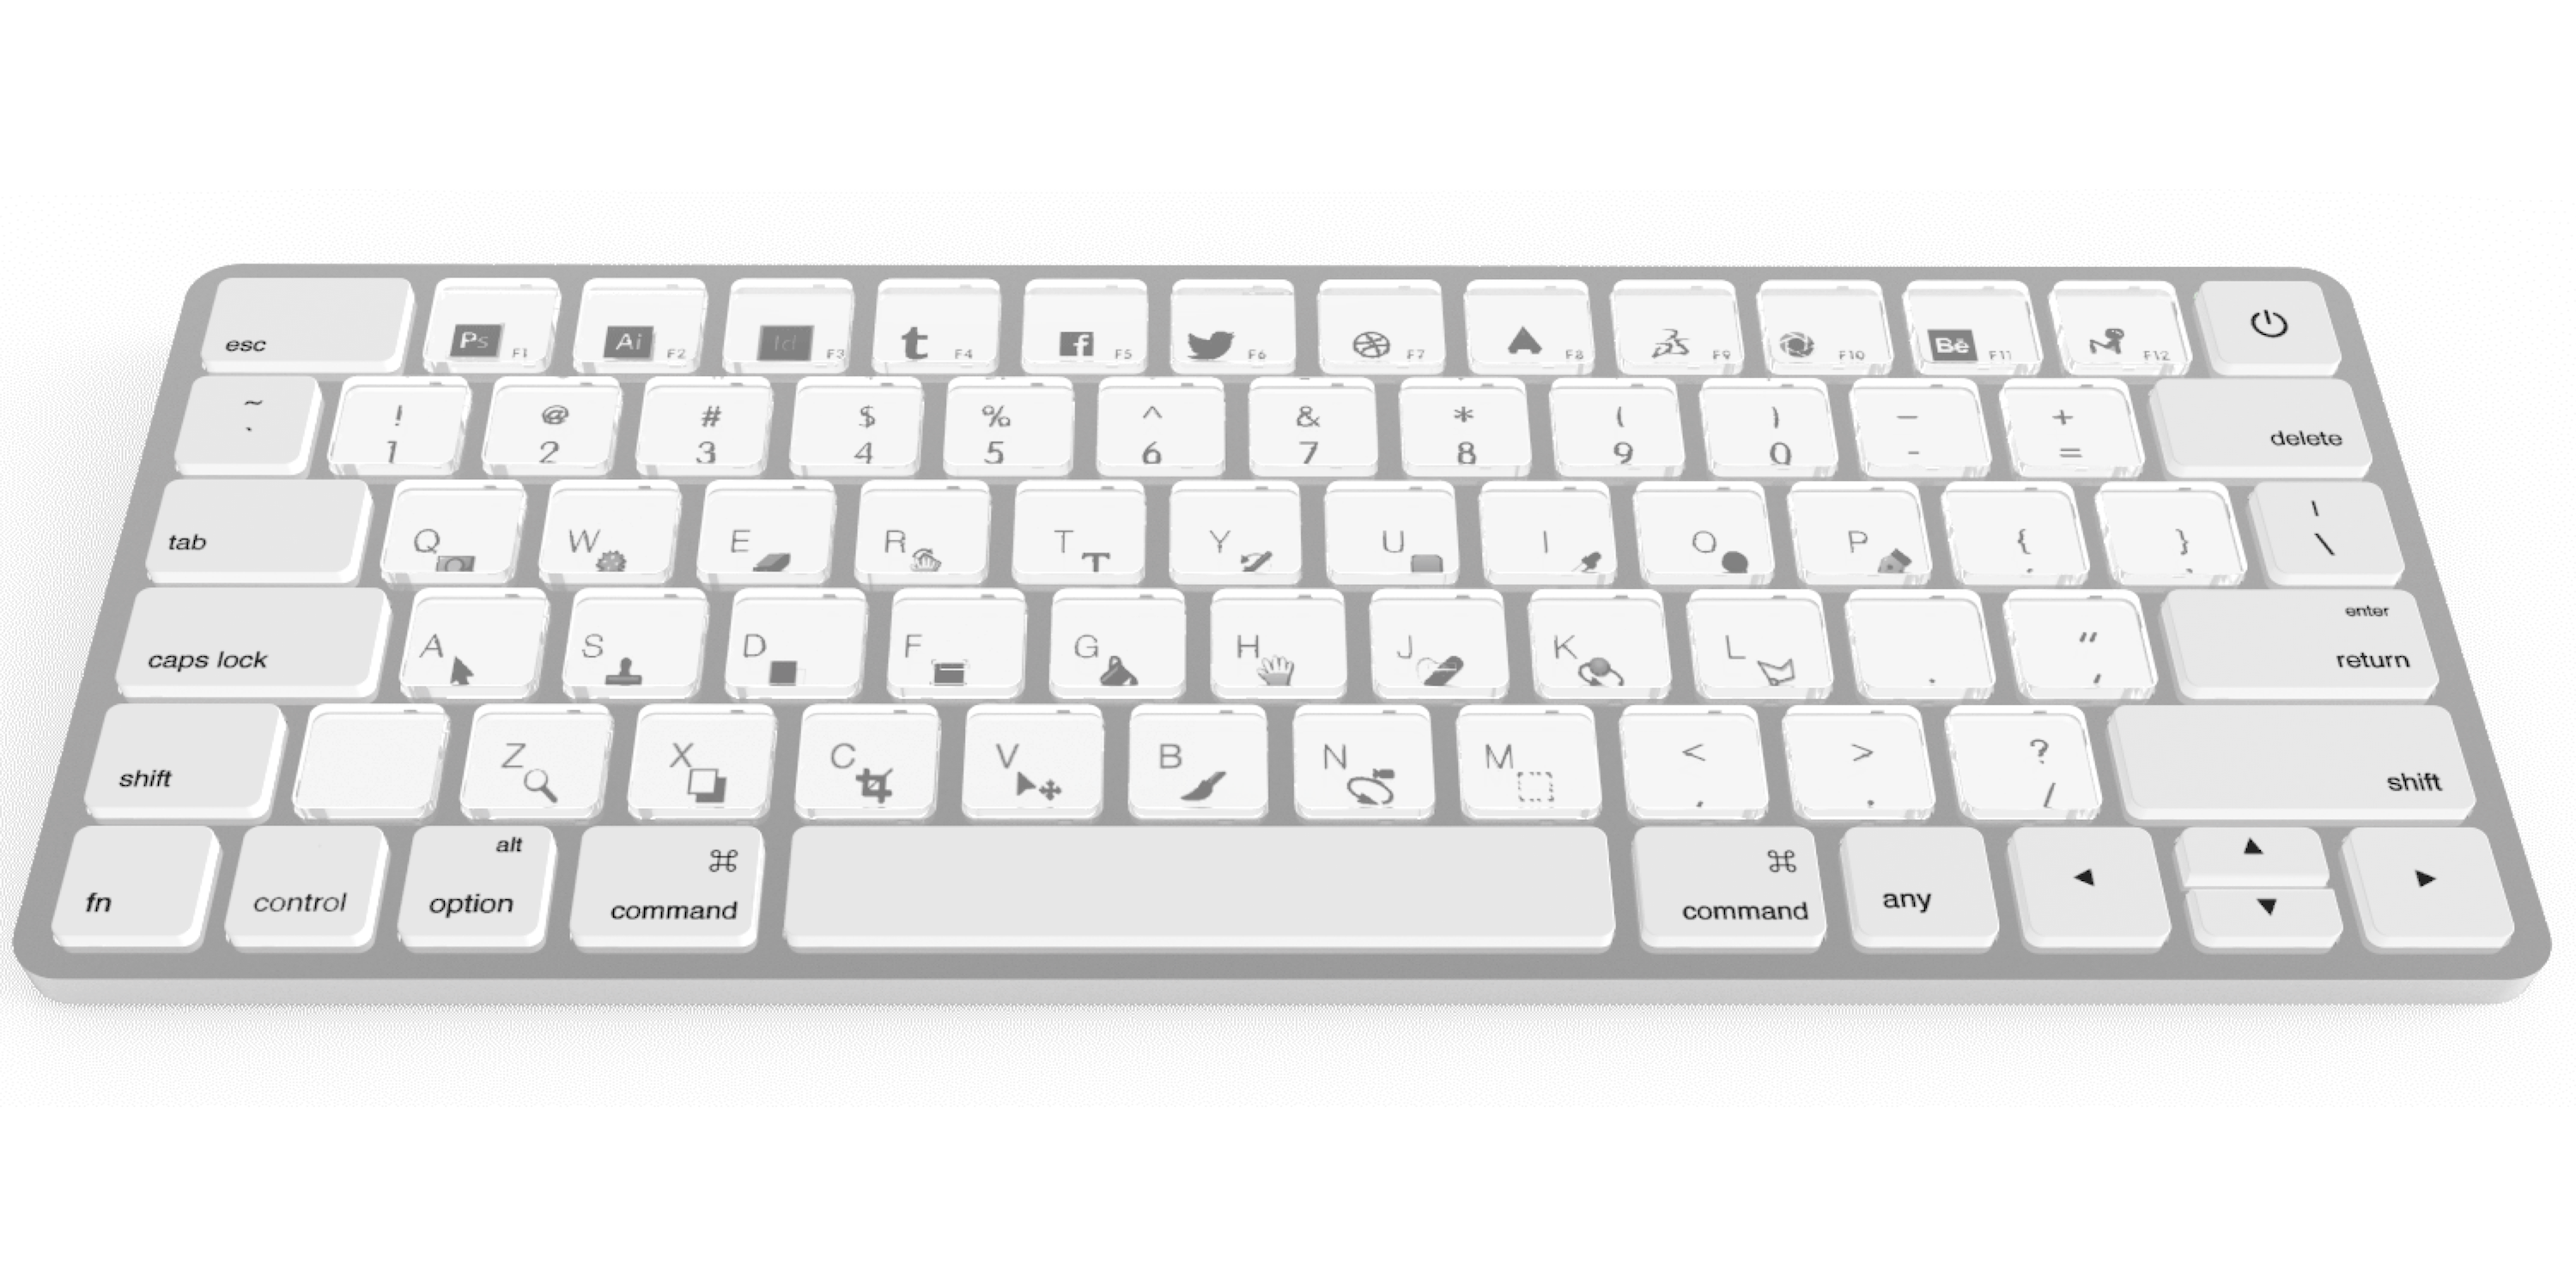 sonder-keyboard